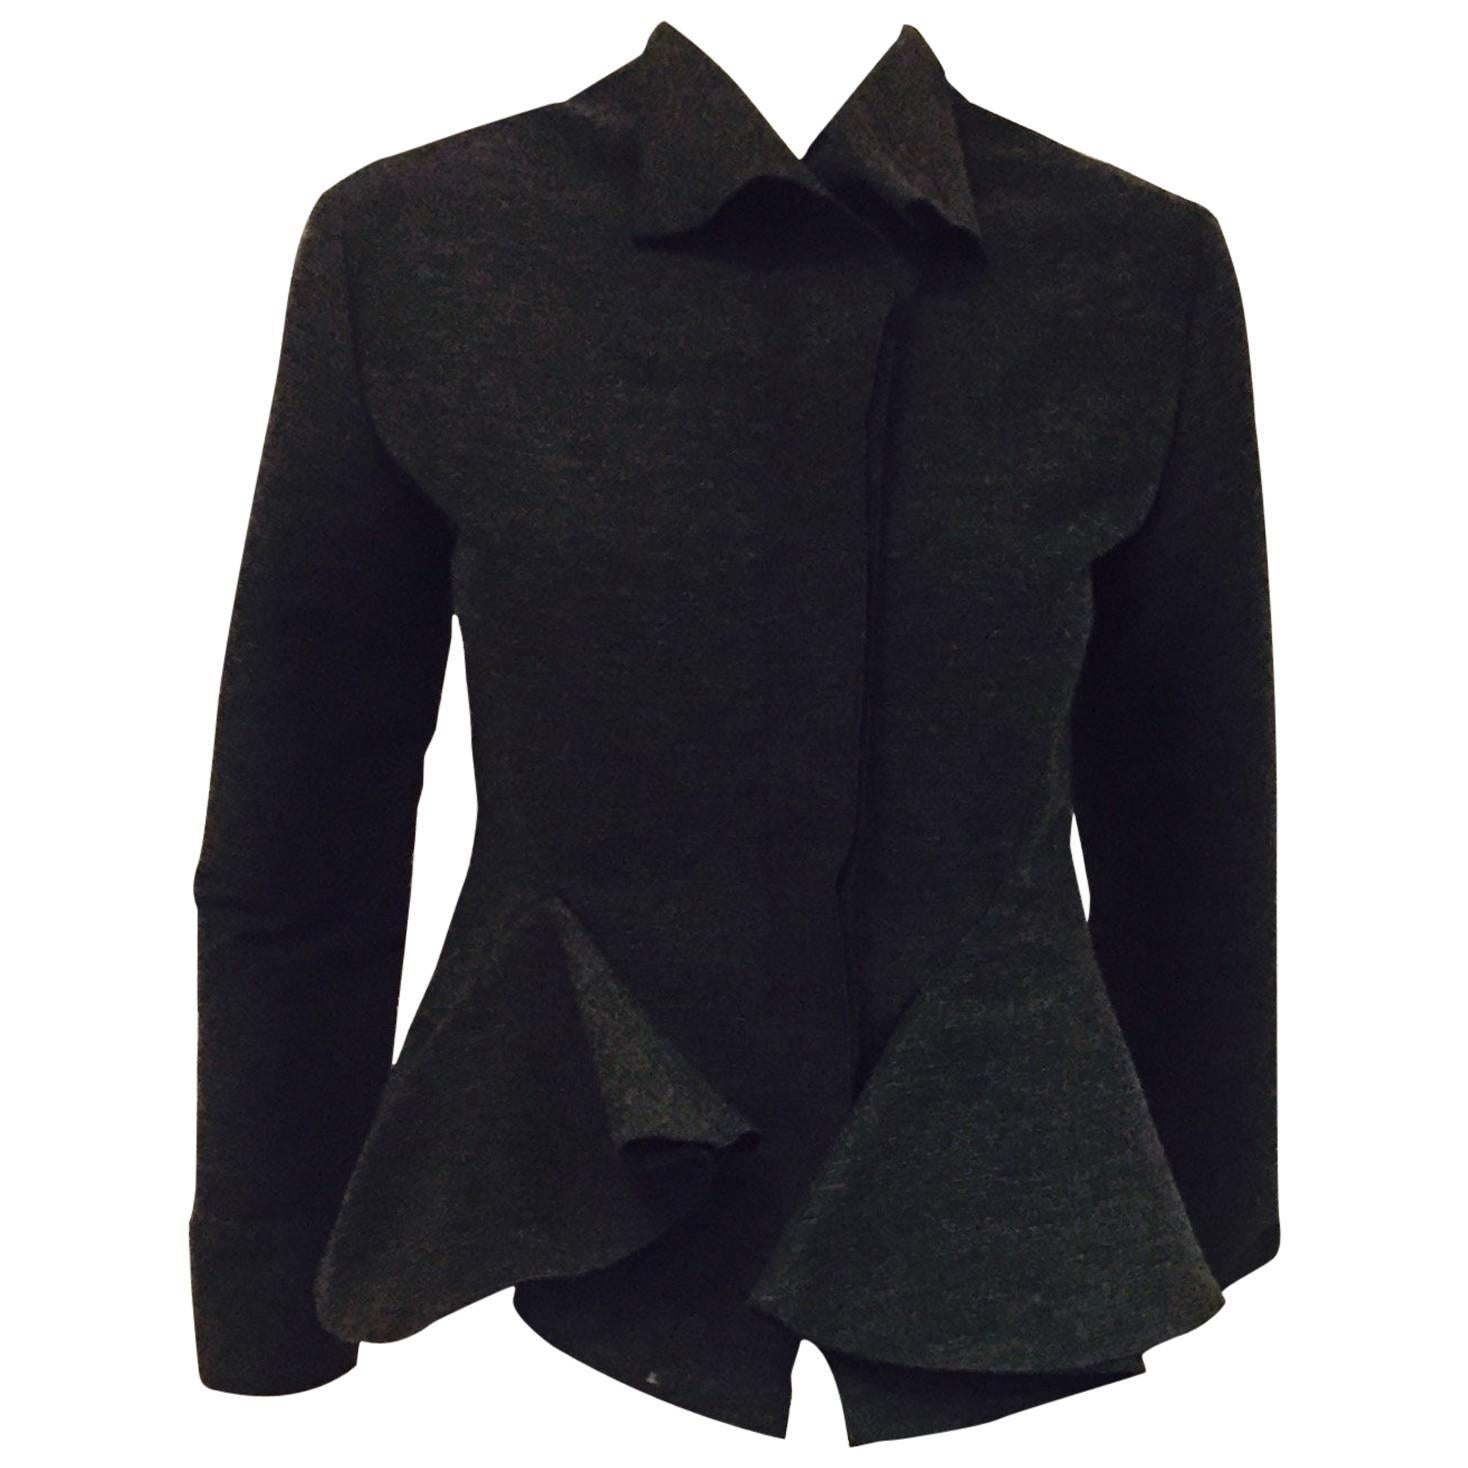 Luscious Lanvin Grey Flirty Jacket with Ruffles & Long Sleeves a True Heritage